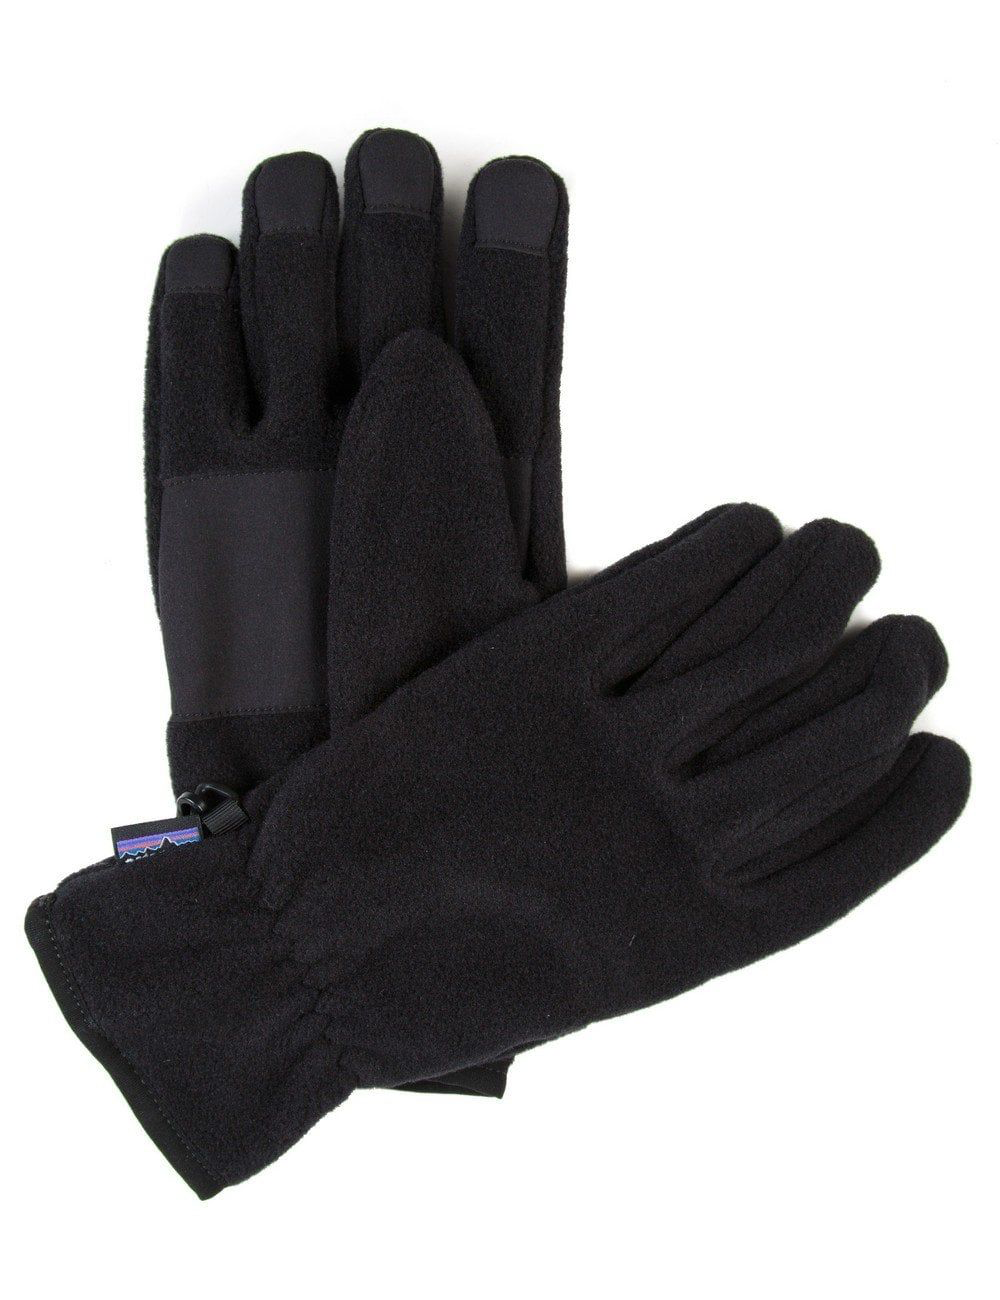 Patagonia Synchilla Fleece Gloves - Black - Small